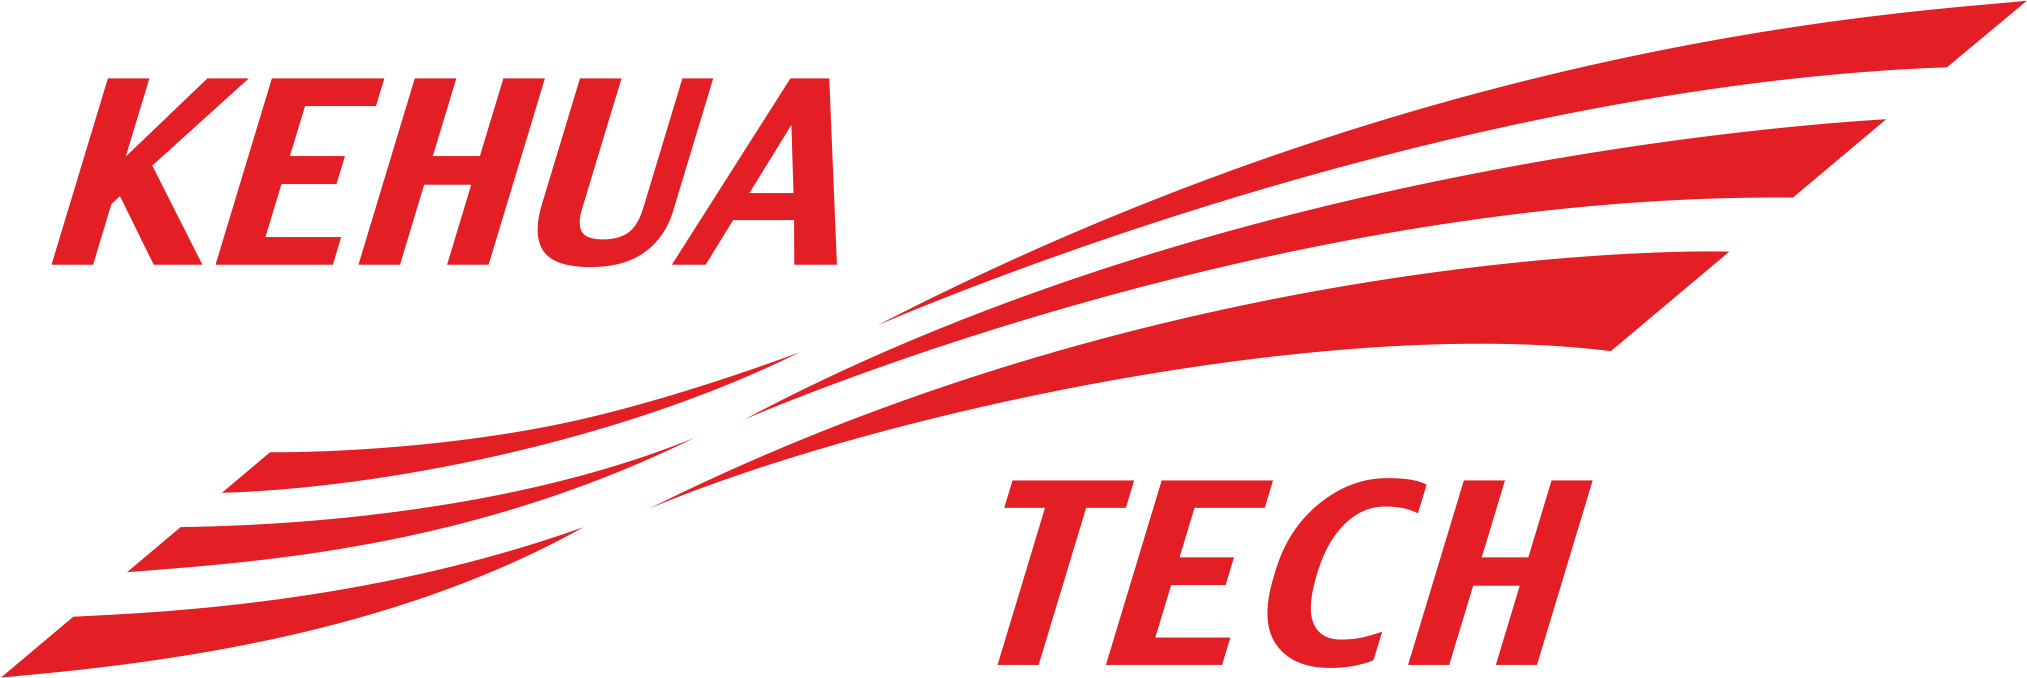 Kehua Tech